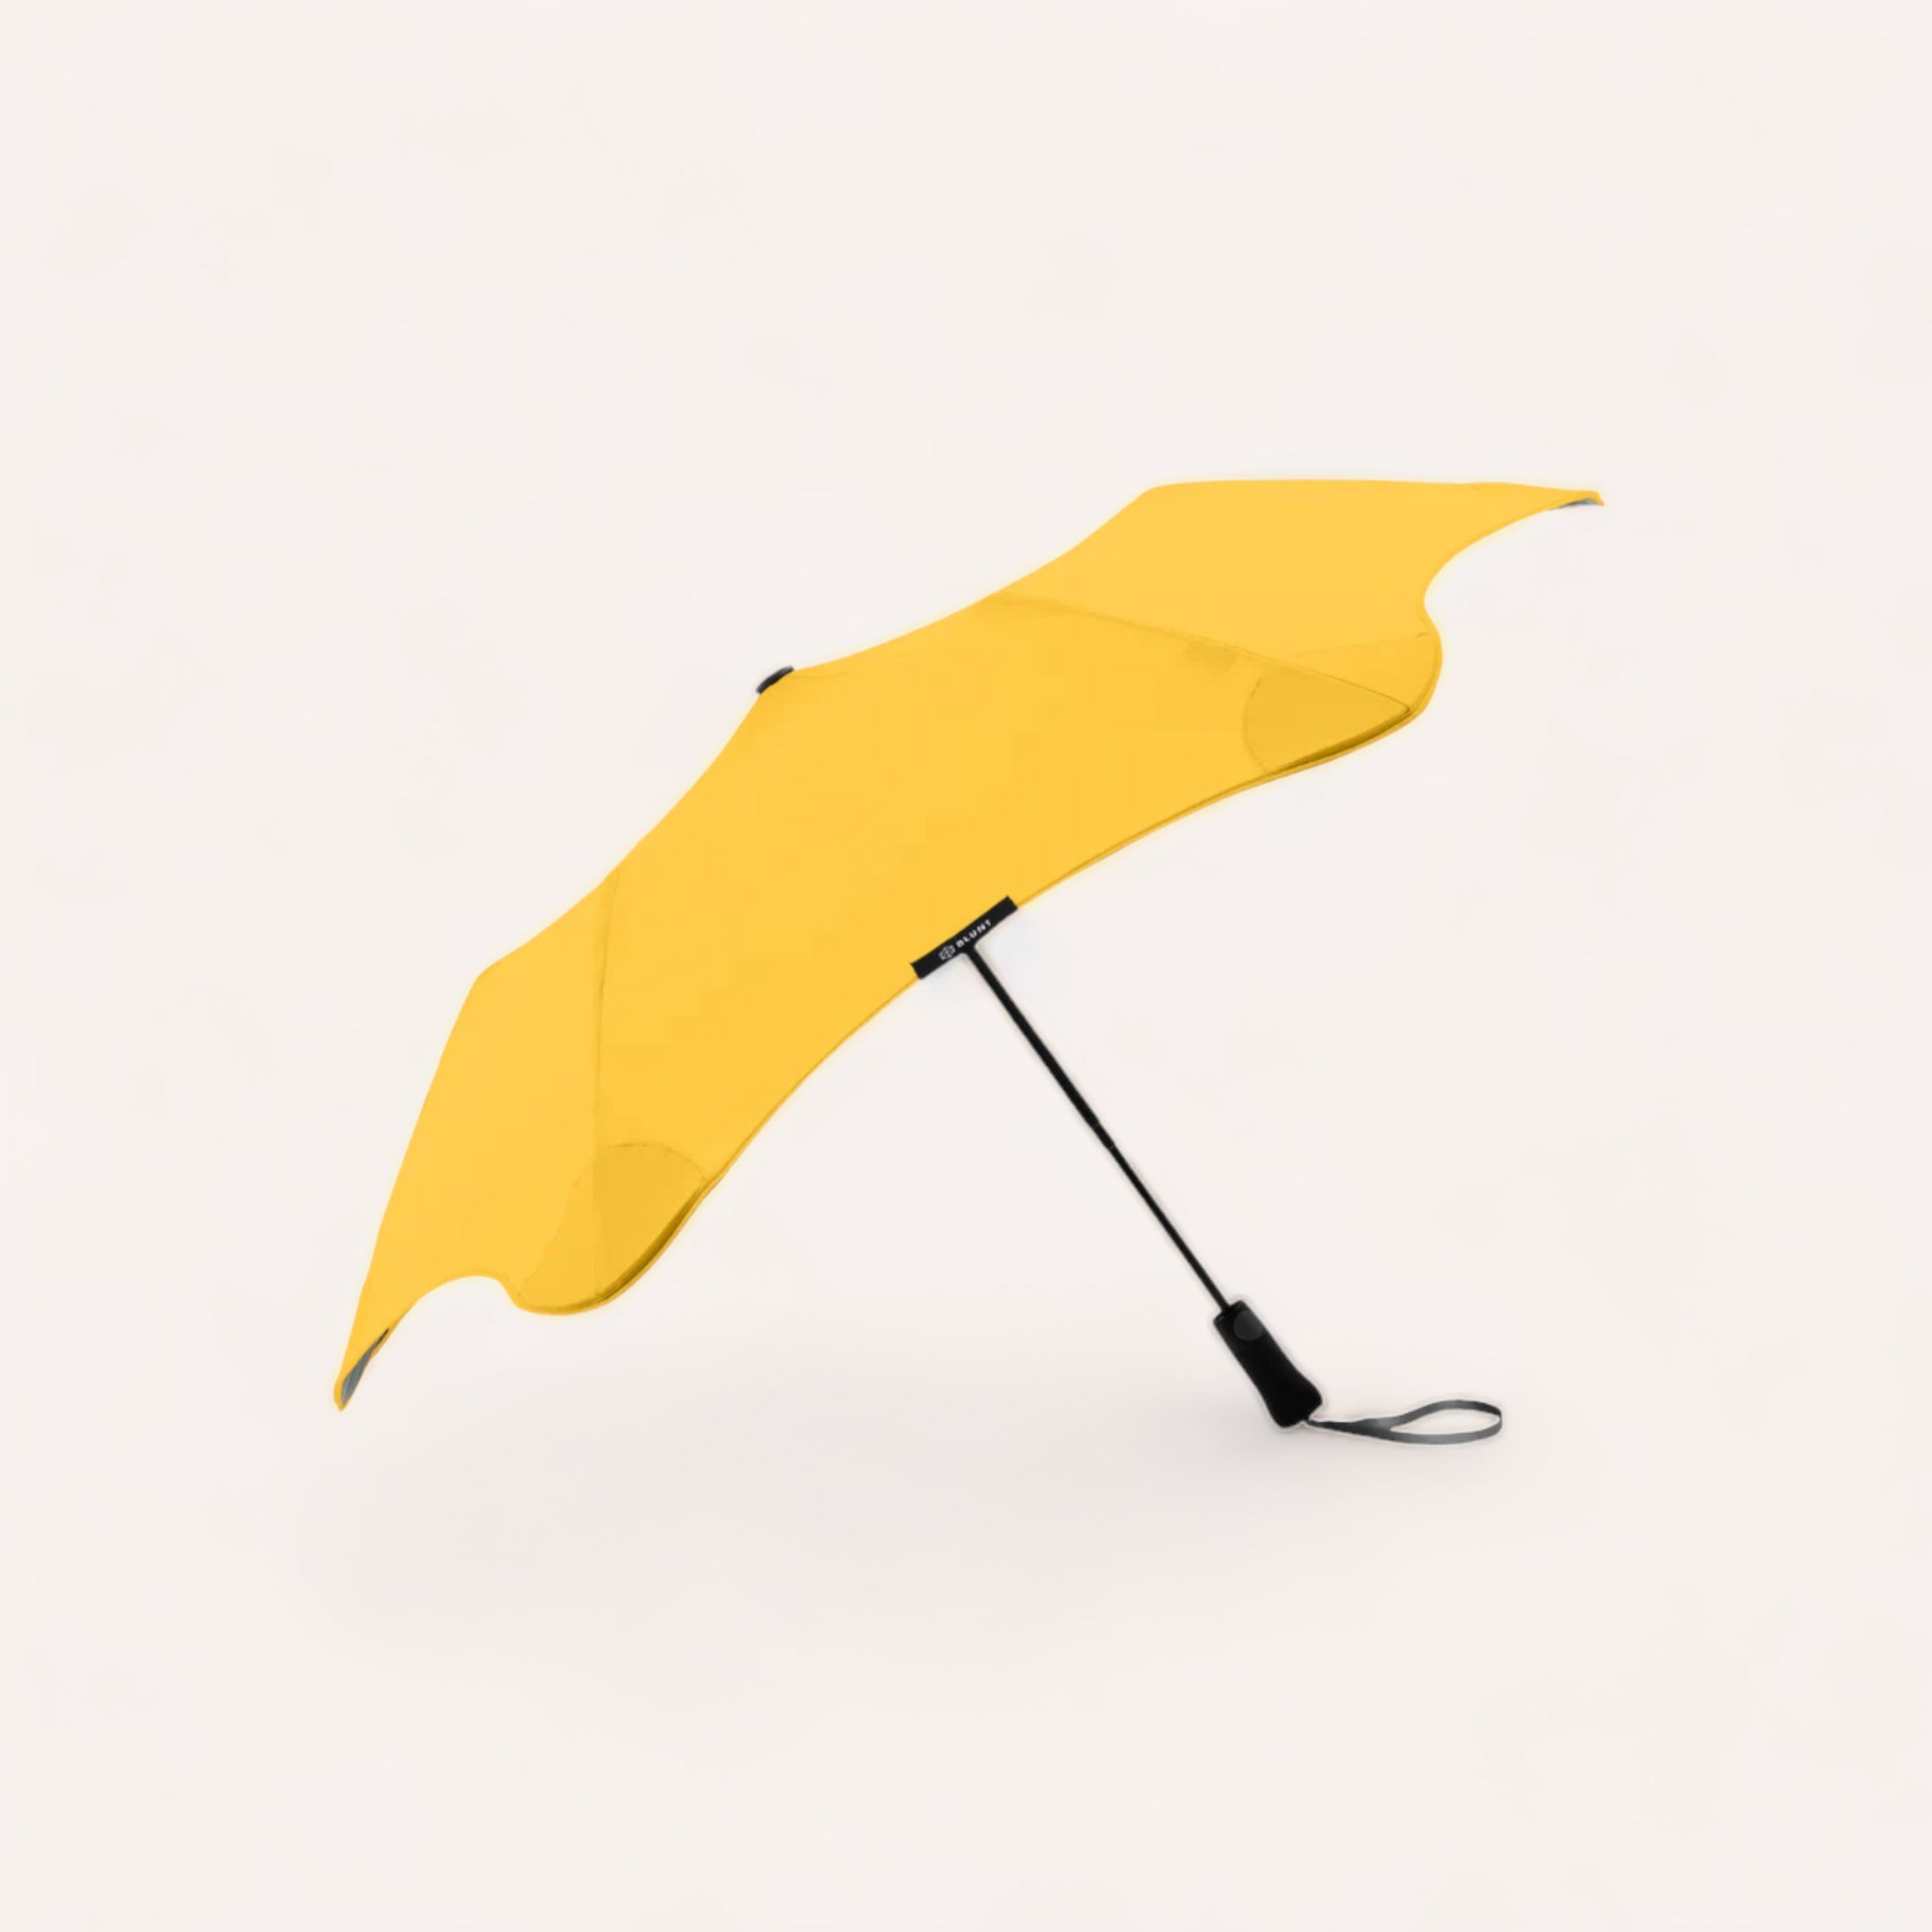 blunt metro yellow umbrella